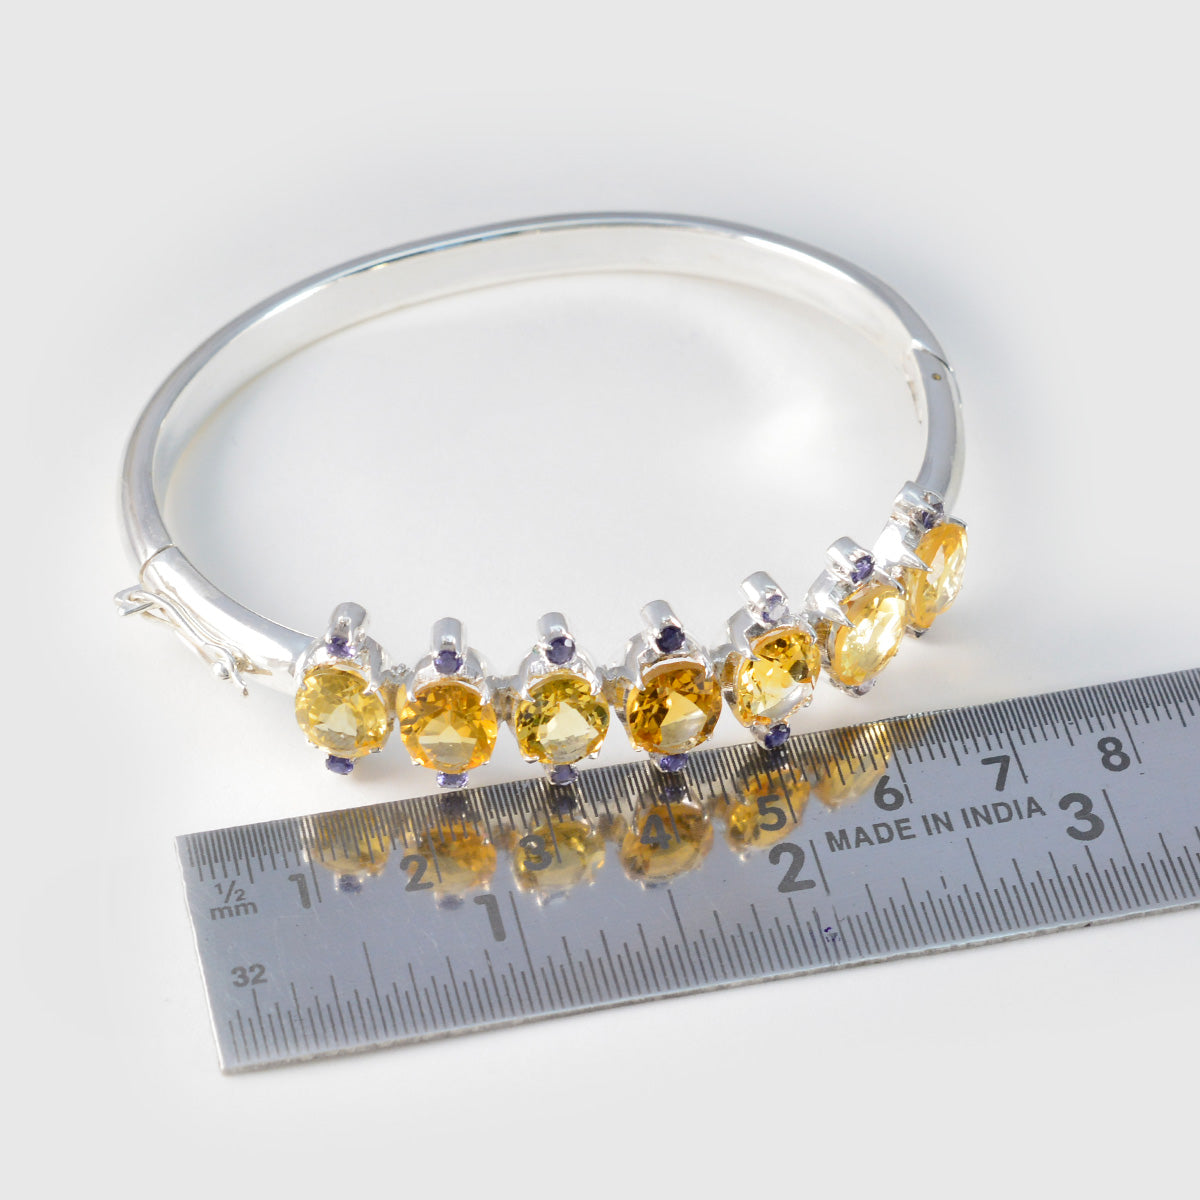 Riyo Total 925 Sterling Silver Bracelet For Women Multi Bracelet Prong Setting Bracelet Bangle Bracelet L Size 6-8.5 Inch.